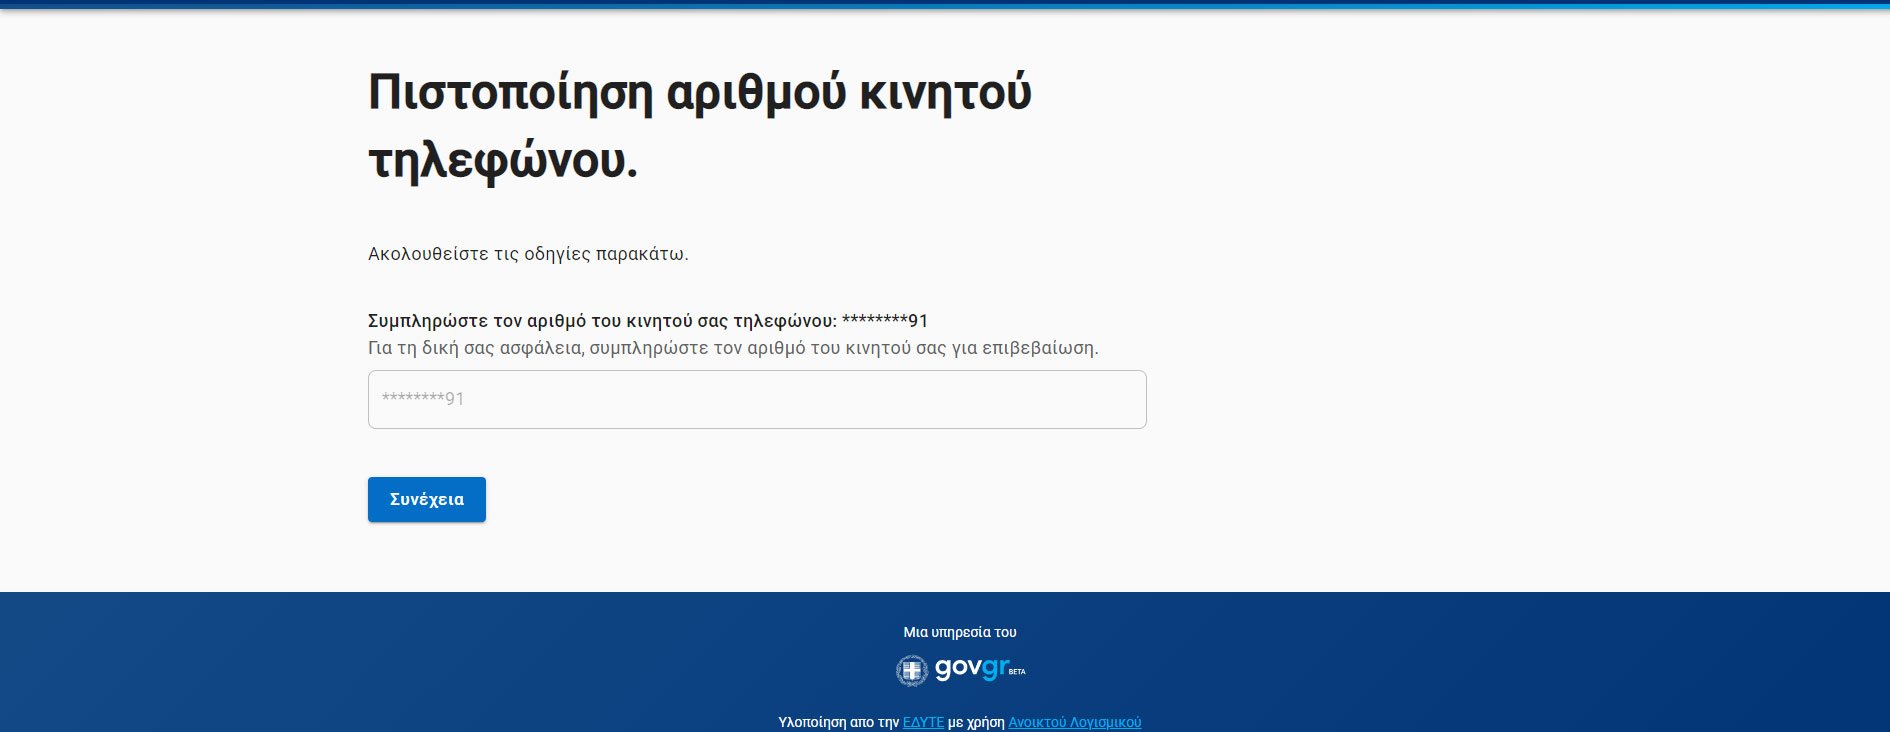 Gov.gr: Πώς να εκδώσετε υπεύθυνη δήλωση - Όλα τα βήματα | Έθνος